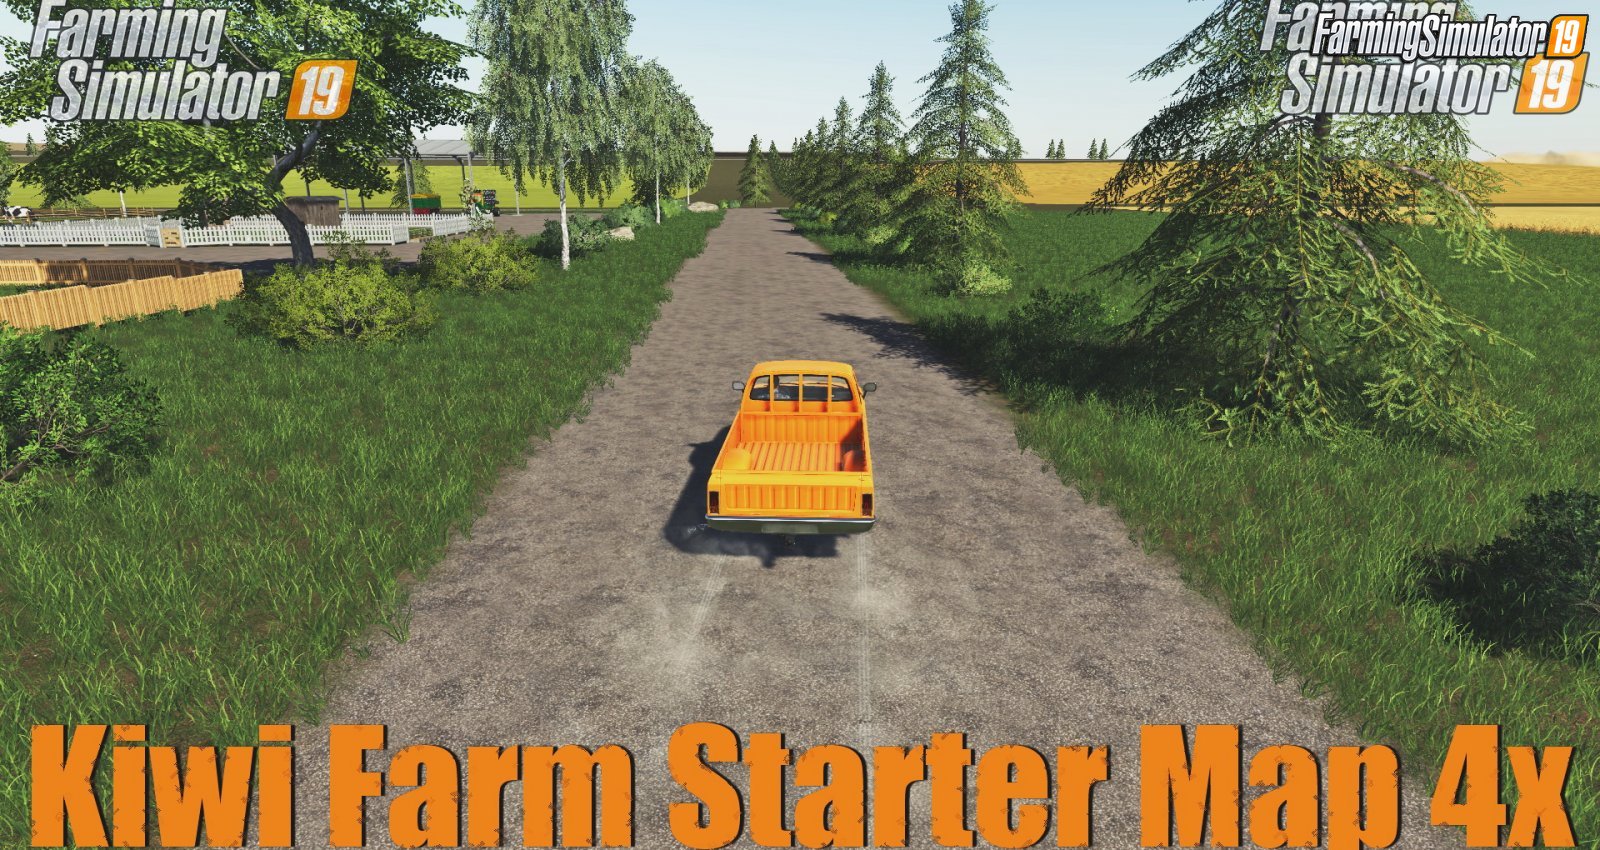 Kiwi Farm Starter Map 4x by Cazz64 - Farming Simulator 19